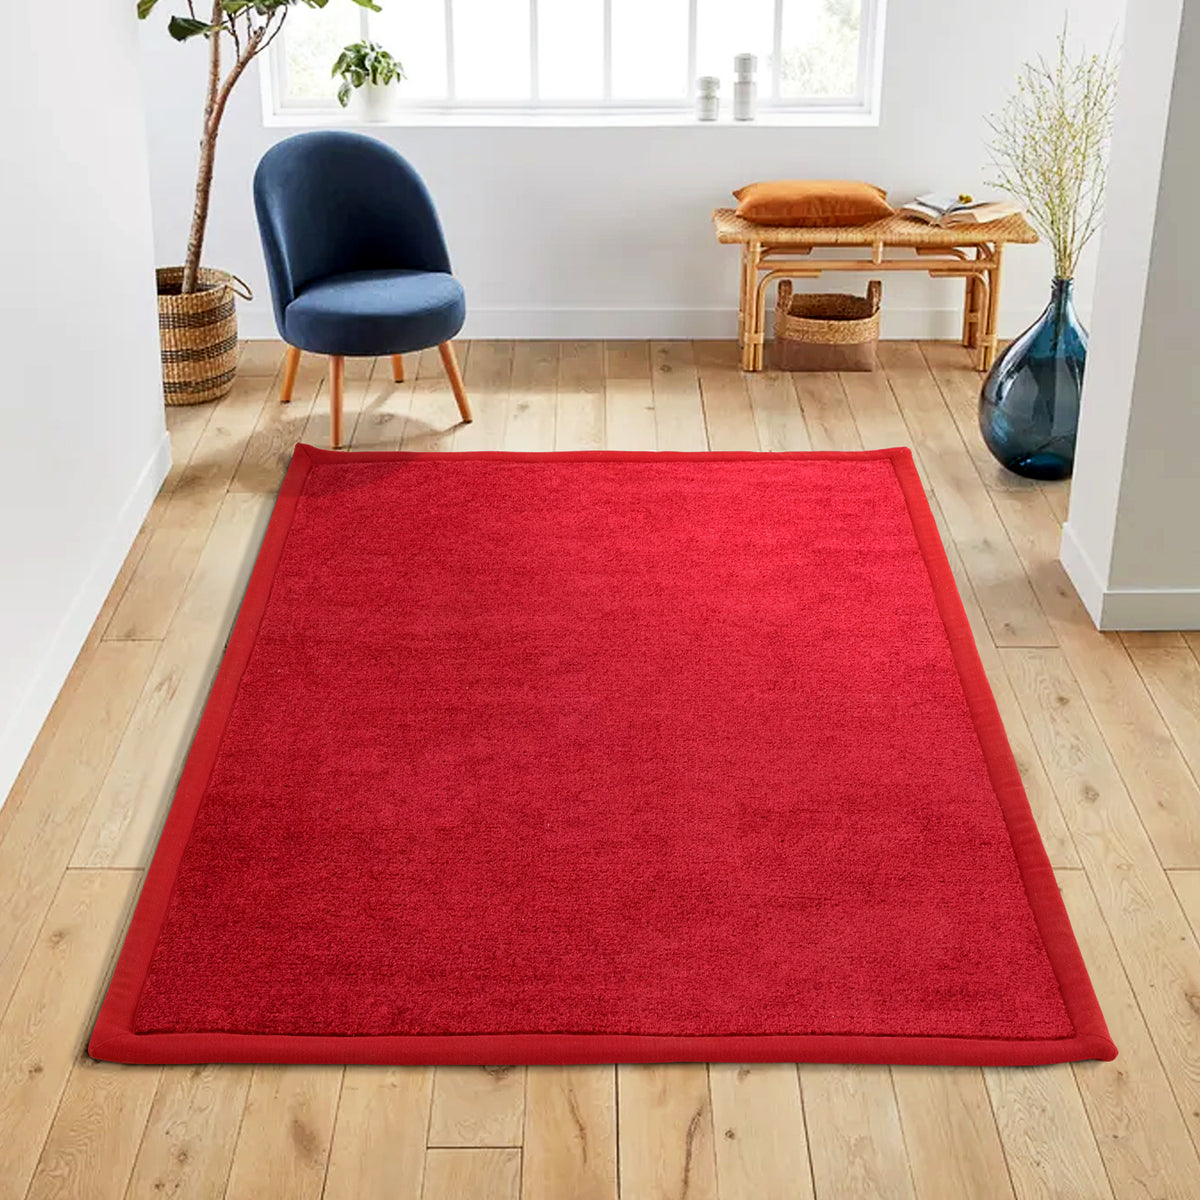 OnlyMat Luxury Red Polypropylene Carpet with Anti-Slip Backing